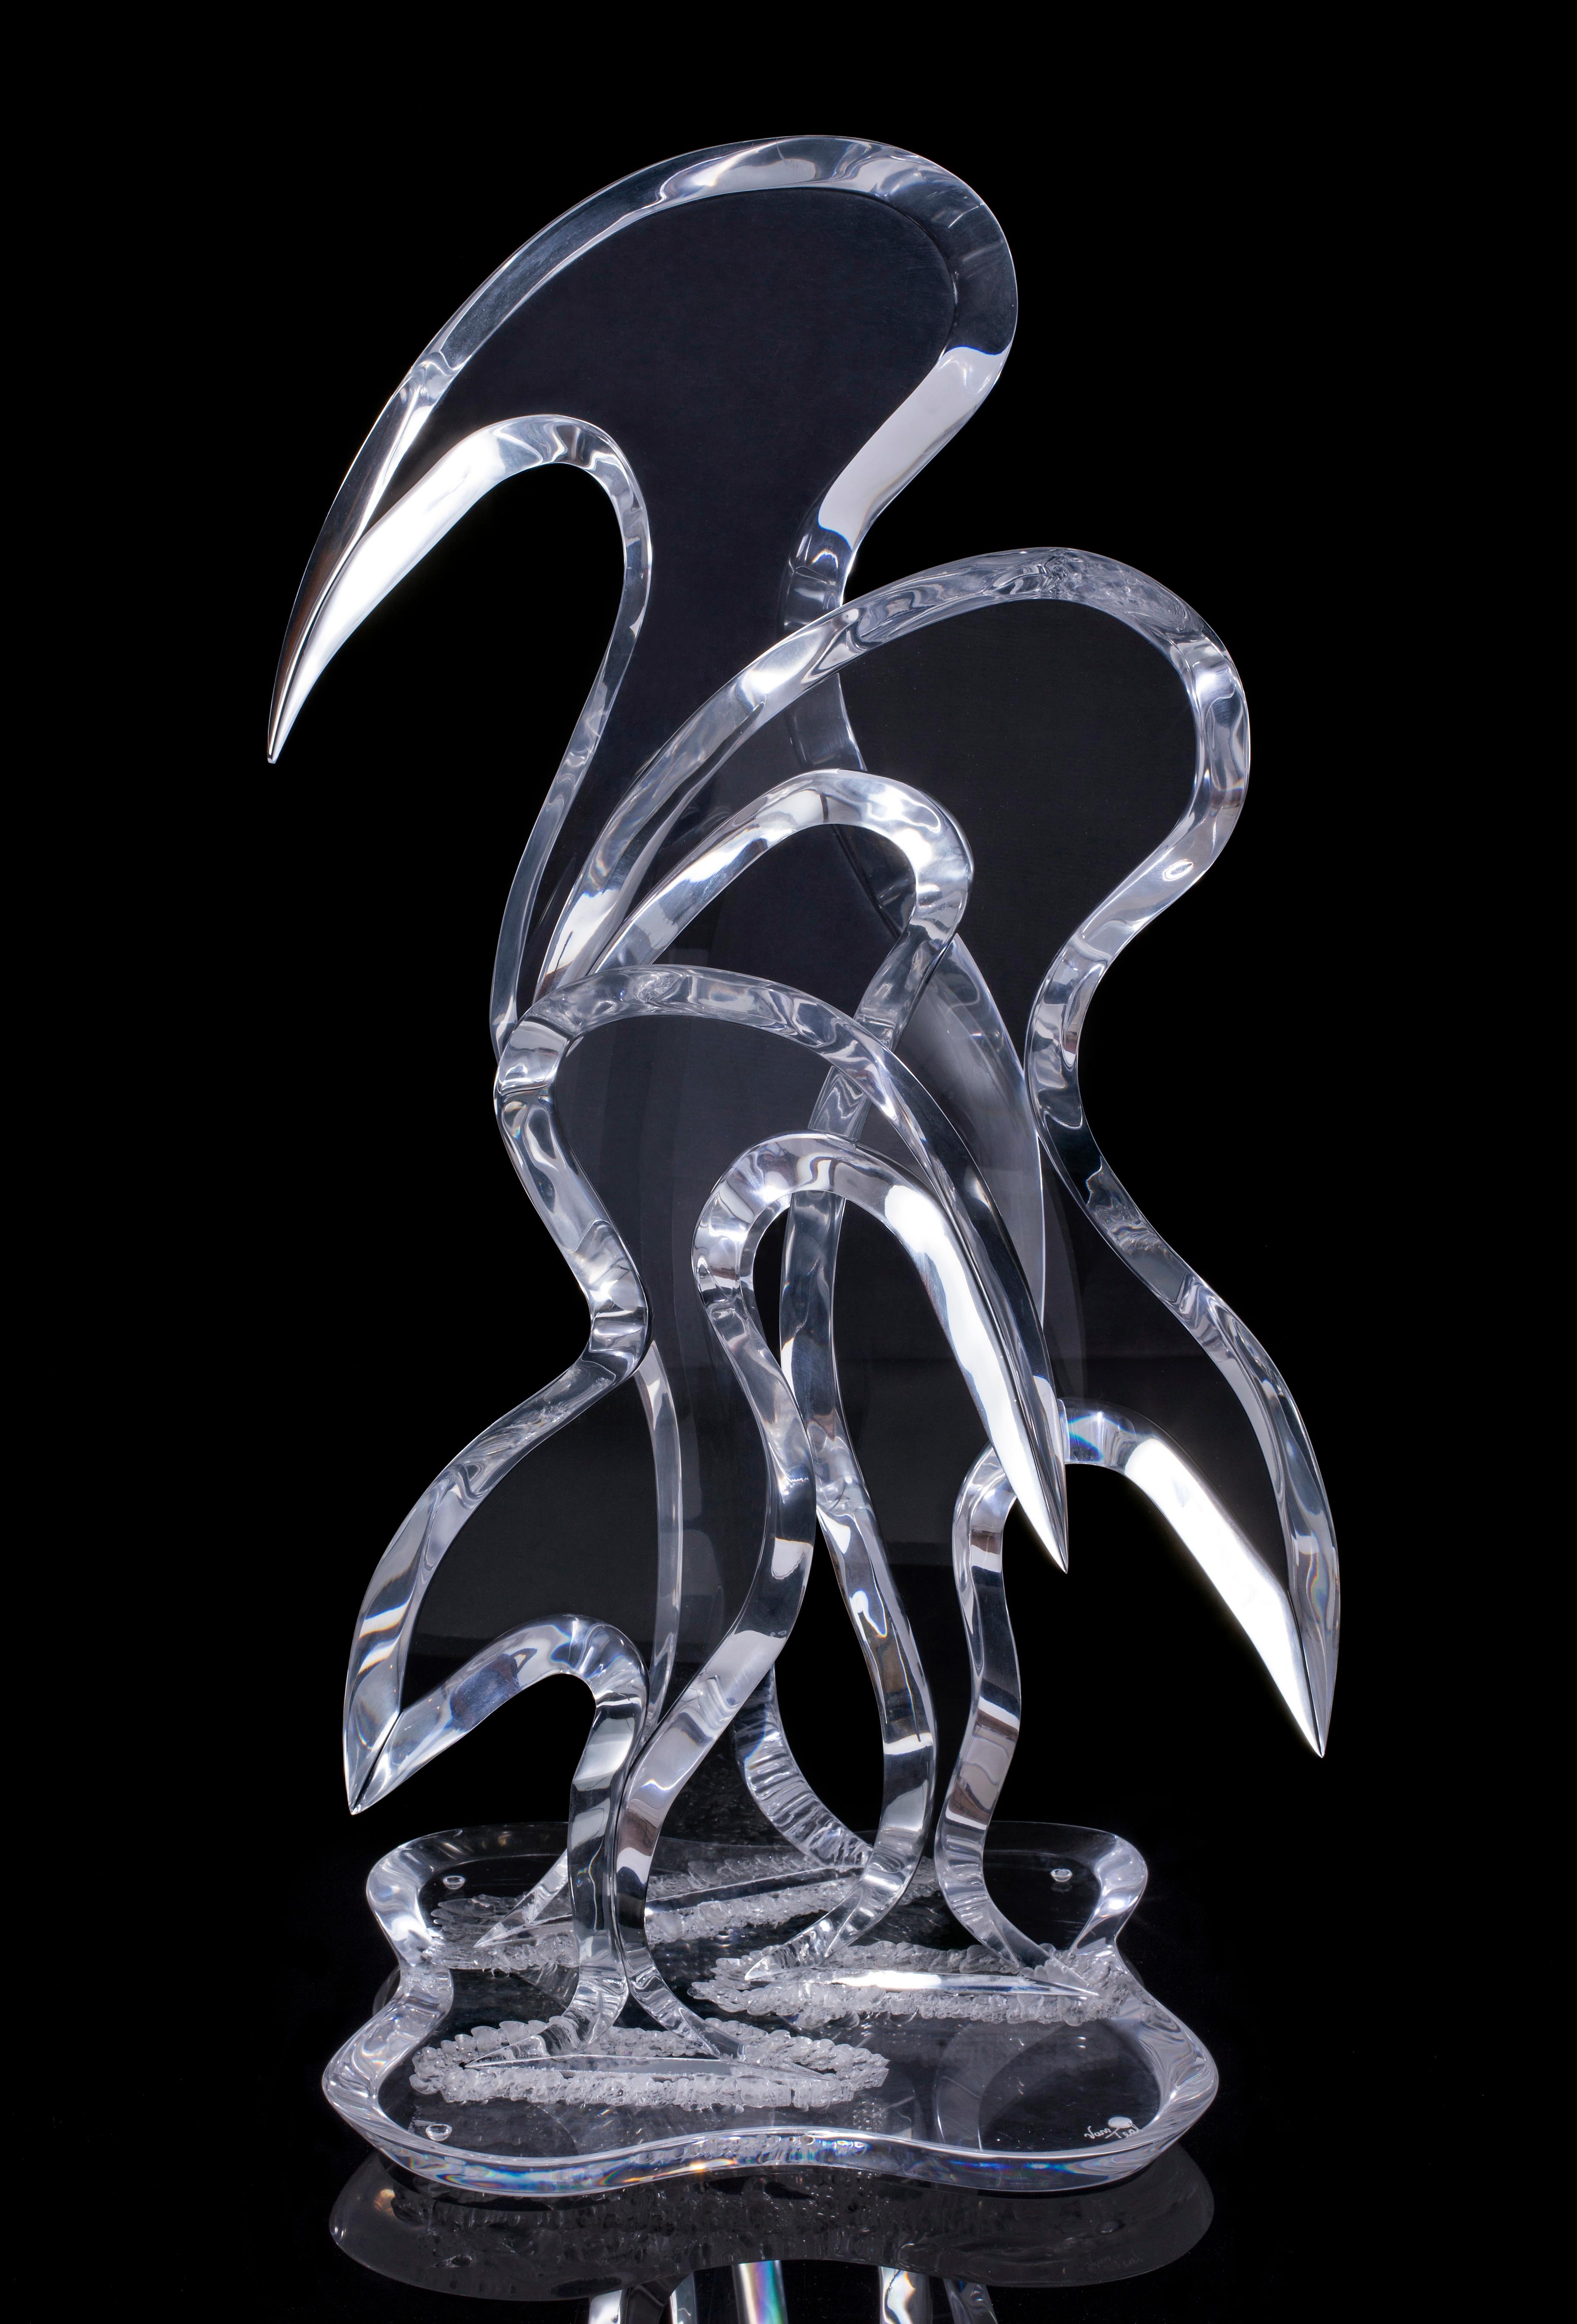 Hivo Van Teal Carved Lucite Translucent Triple Stylized Bird Table Art Sculpture

•	Modern Lucite sculpture modeled as three stylized birds
•	20th century design
•	Signed 